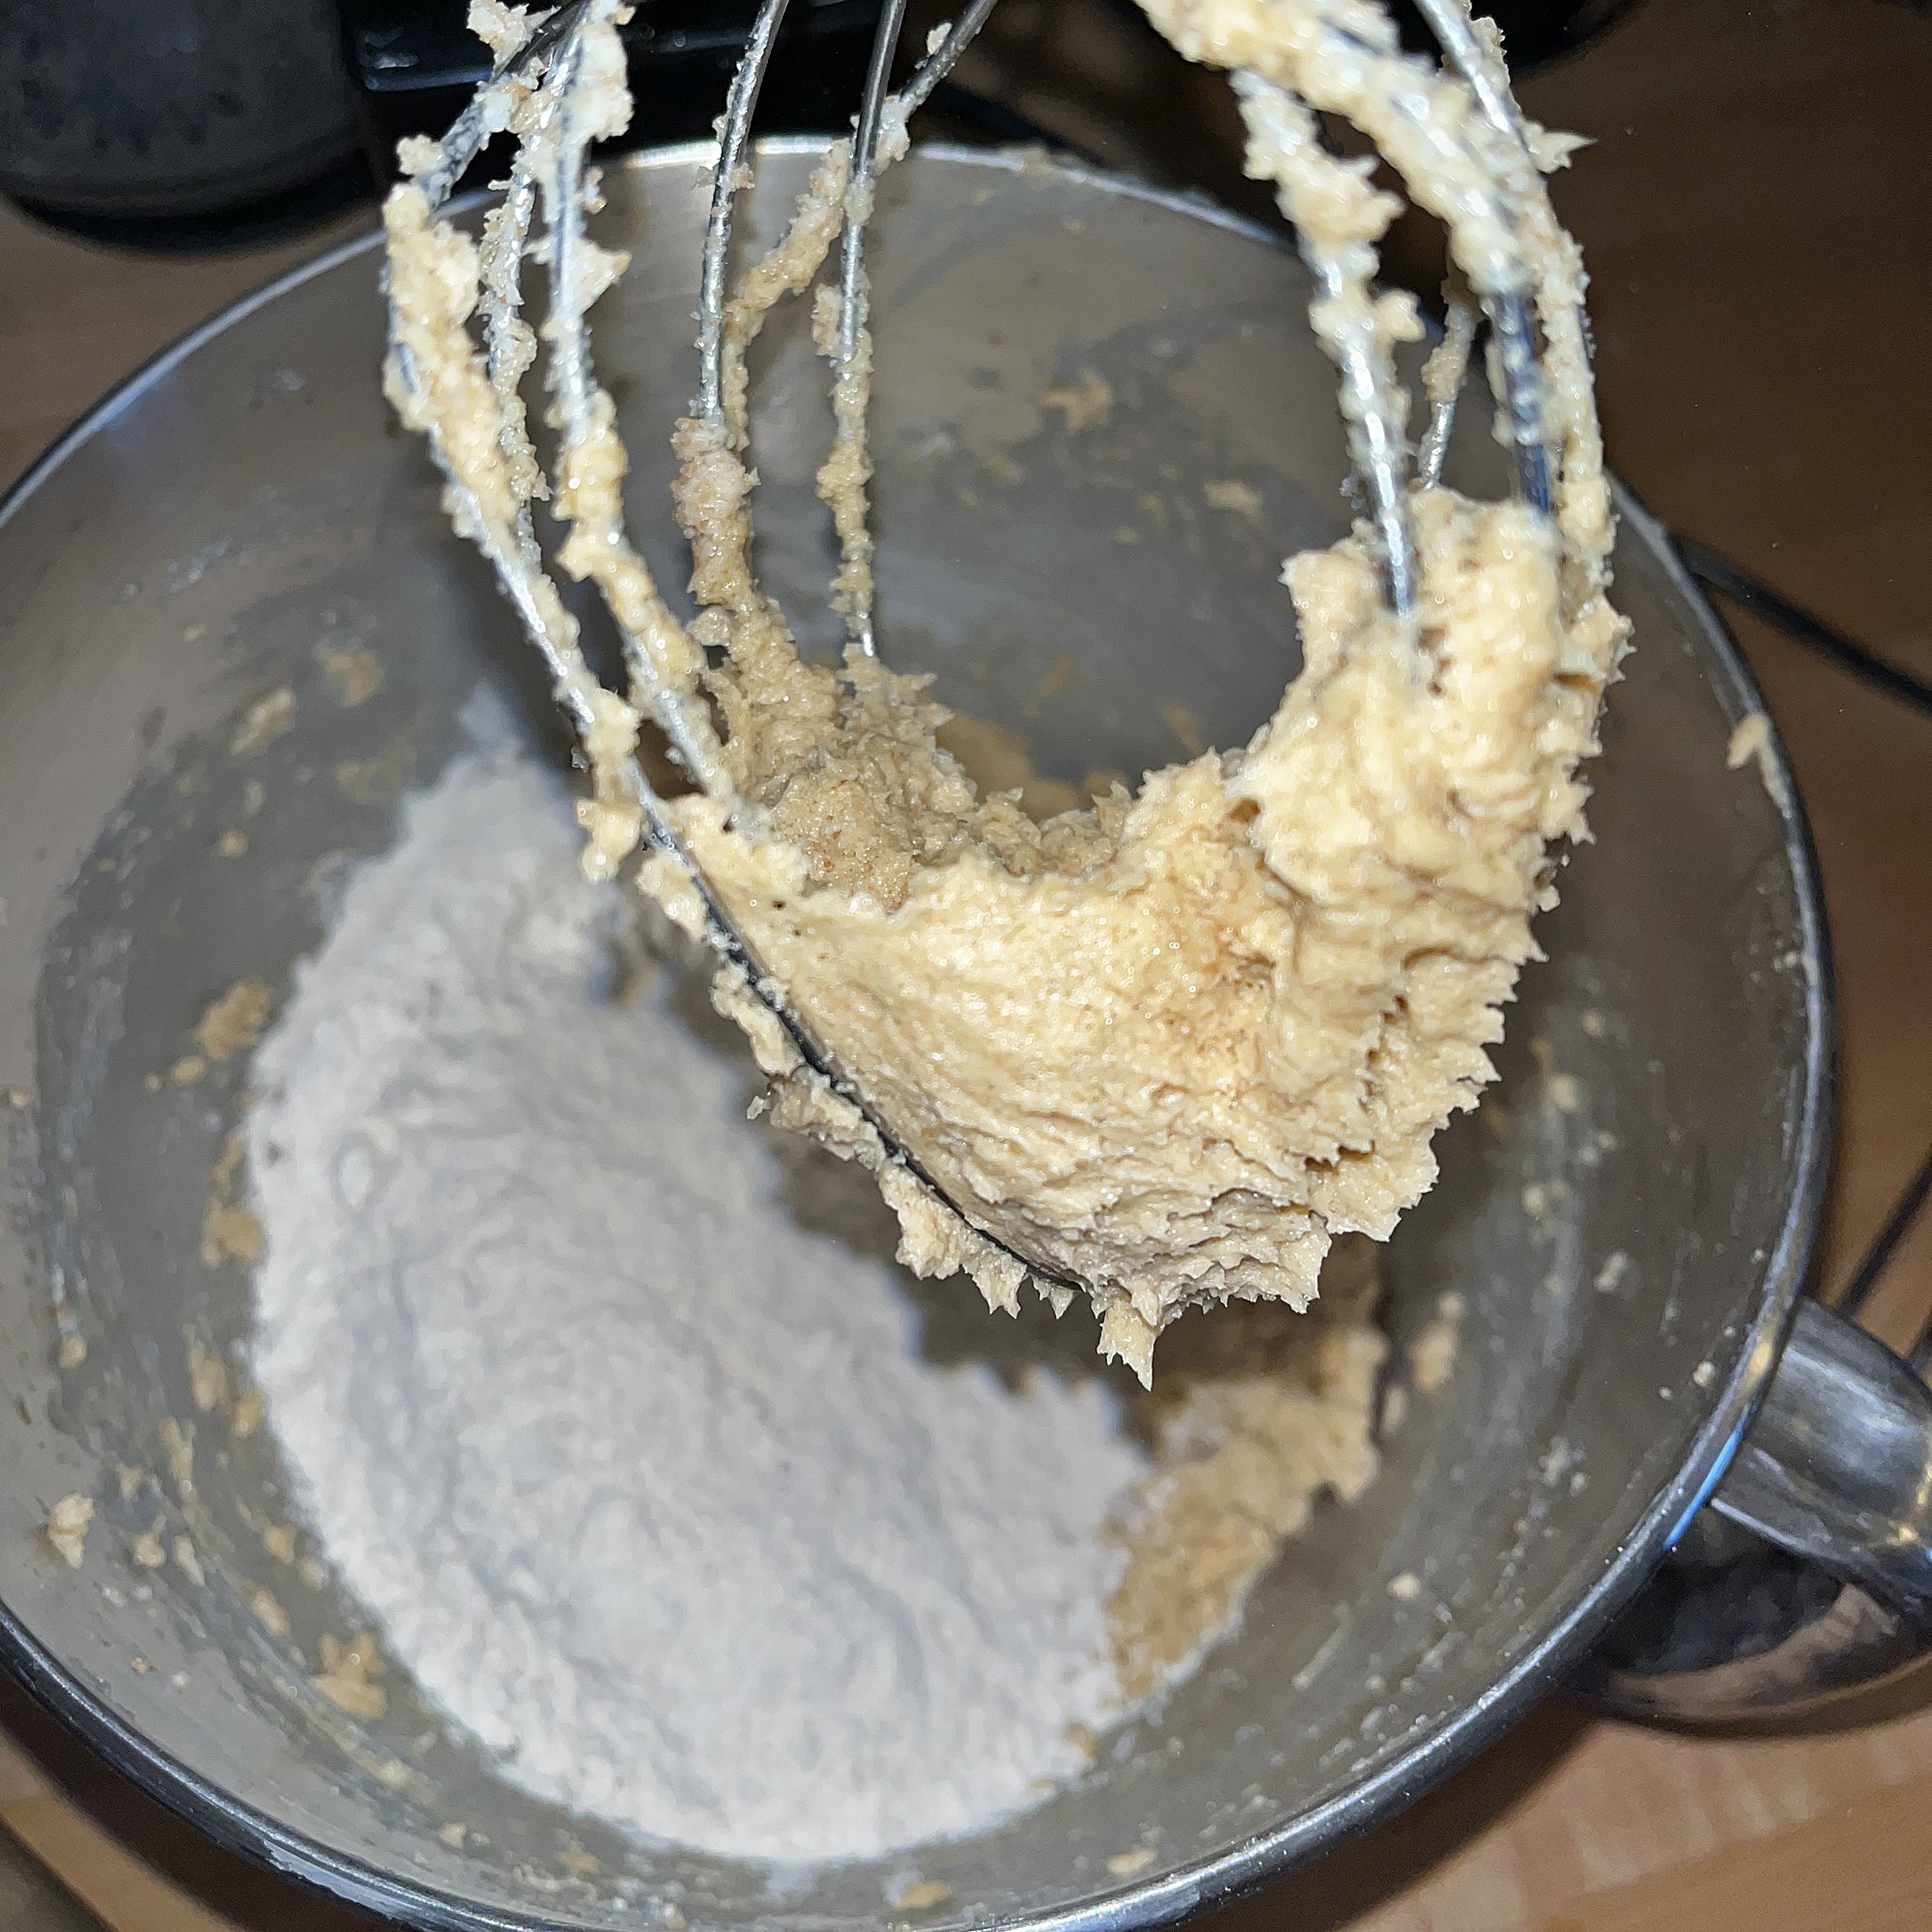 Add flour mixture.